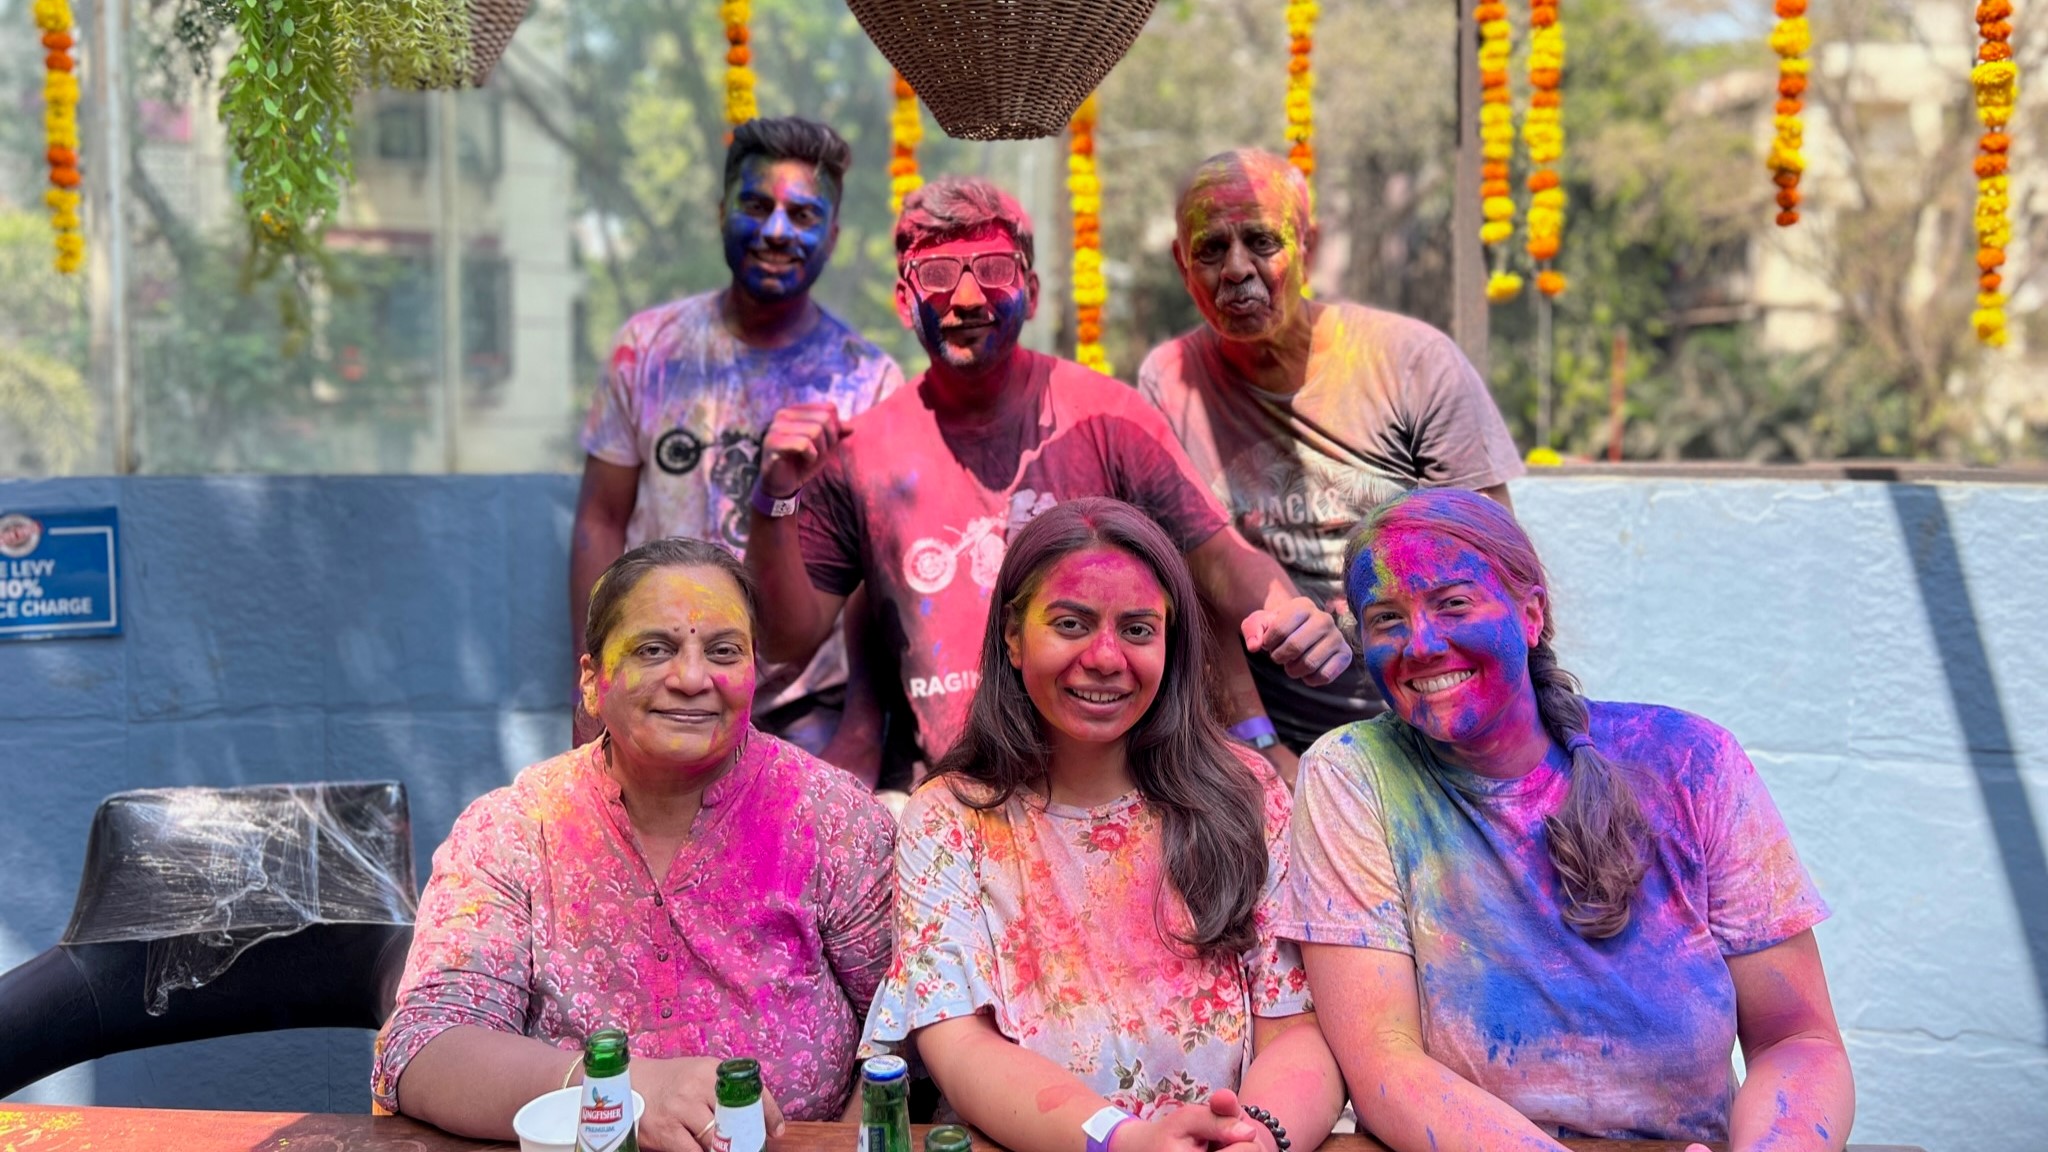 India Trip: Day 5 – Celebrating Holi (March 18th, 2022)